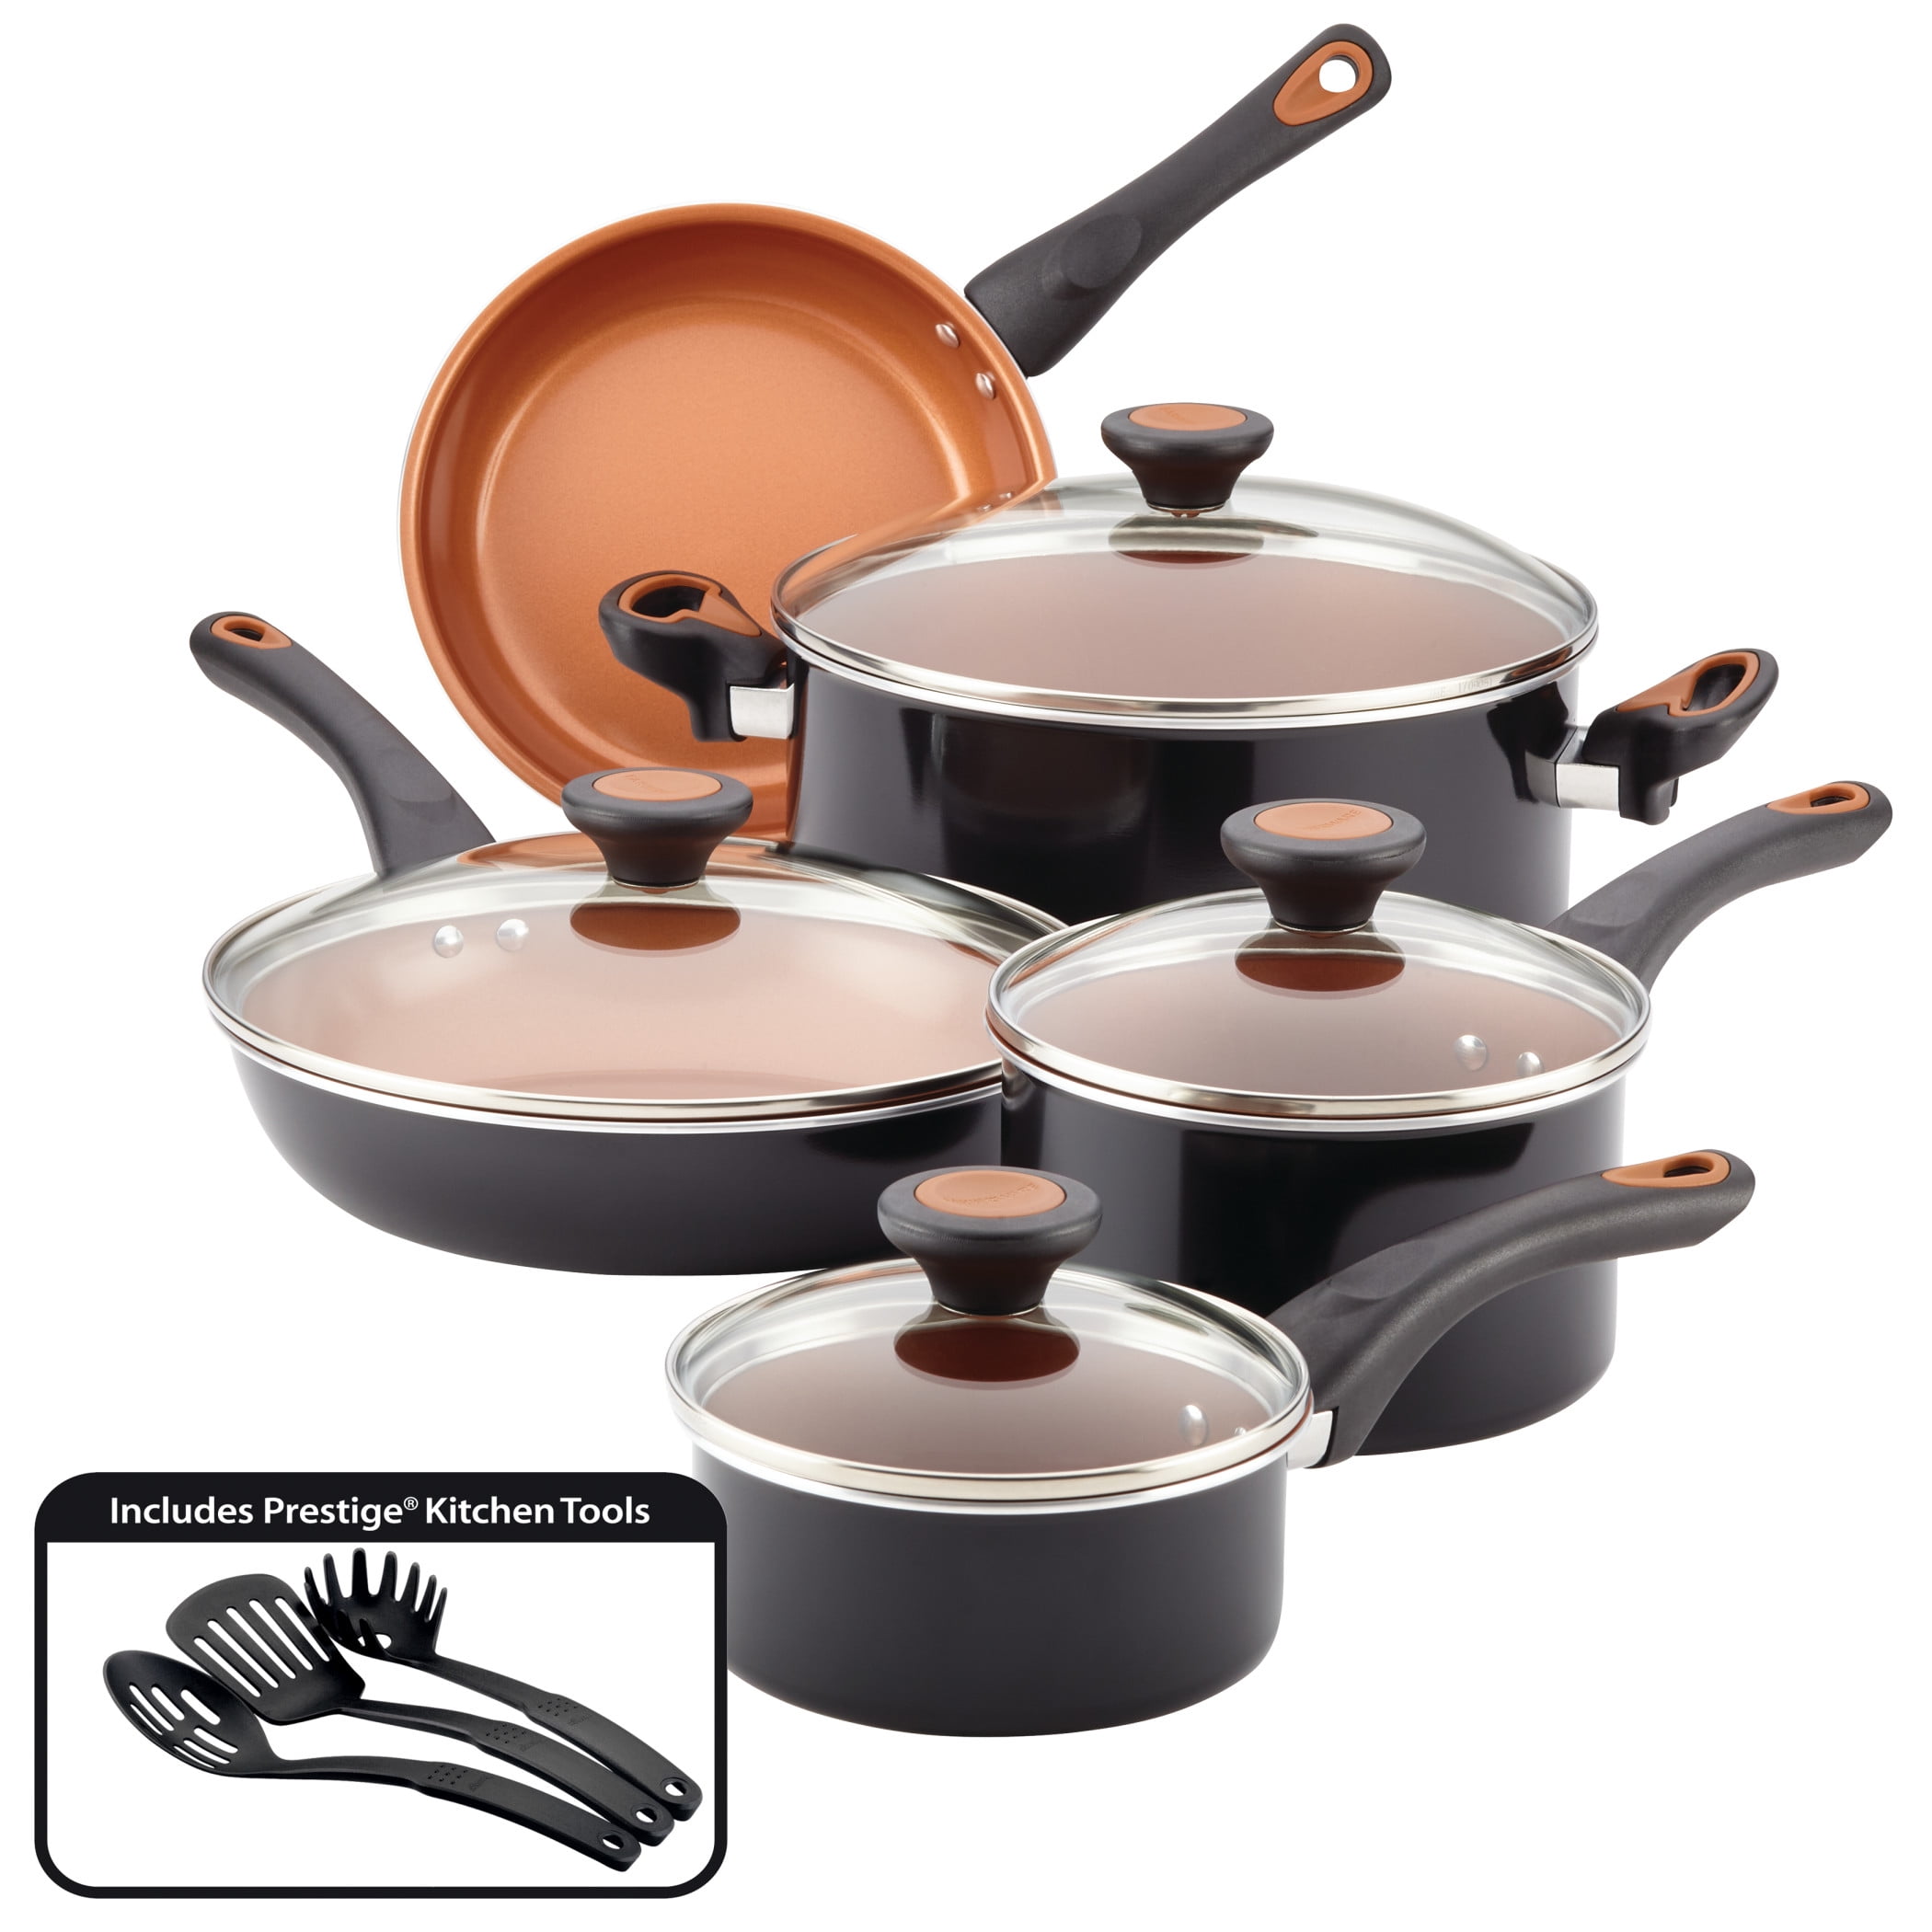  Farberware Glide Deep Nonstick Frying Pan / Fry Pan / Skillet  with Helper Handle - 12.5 Inch, Black : Home & Kitchen